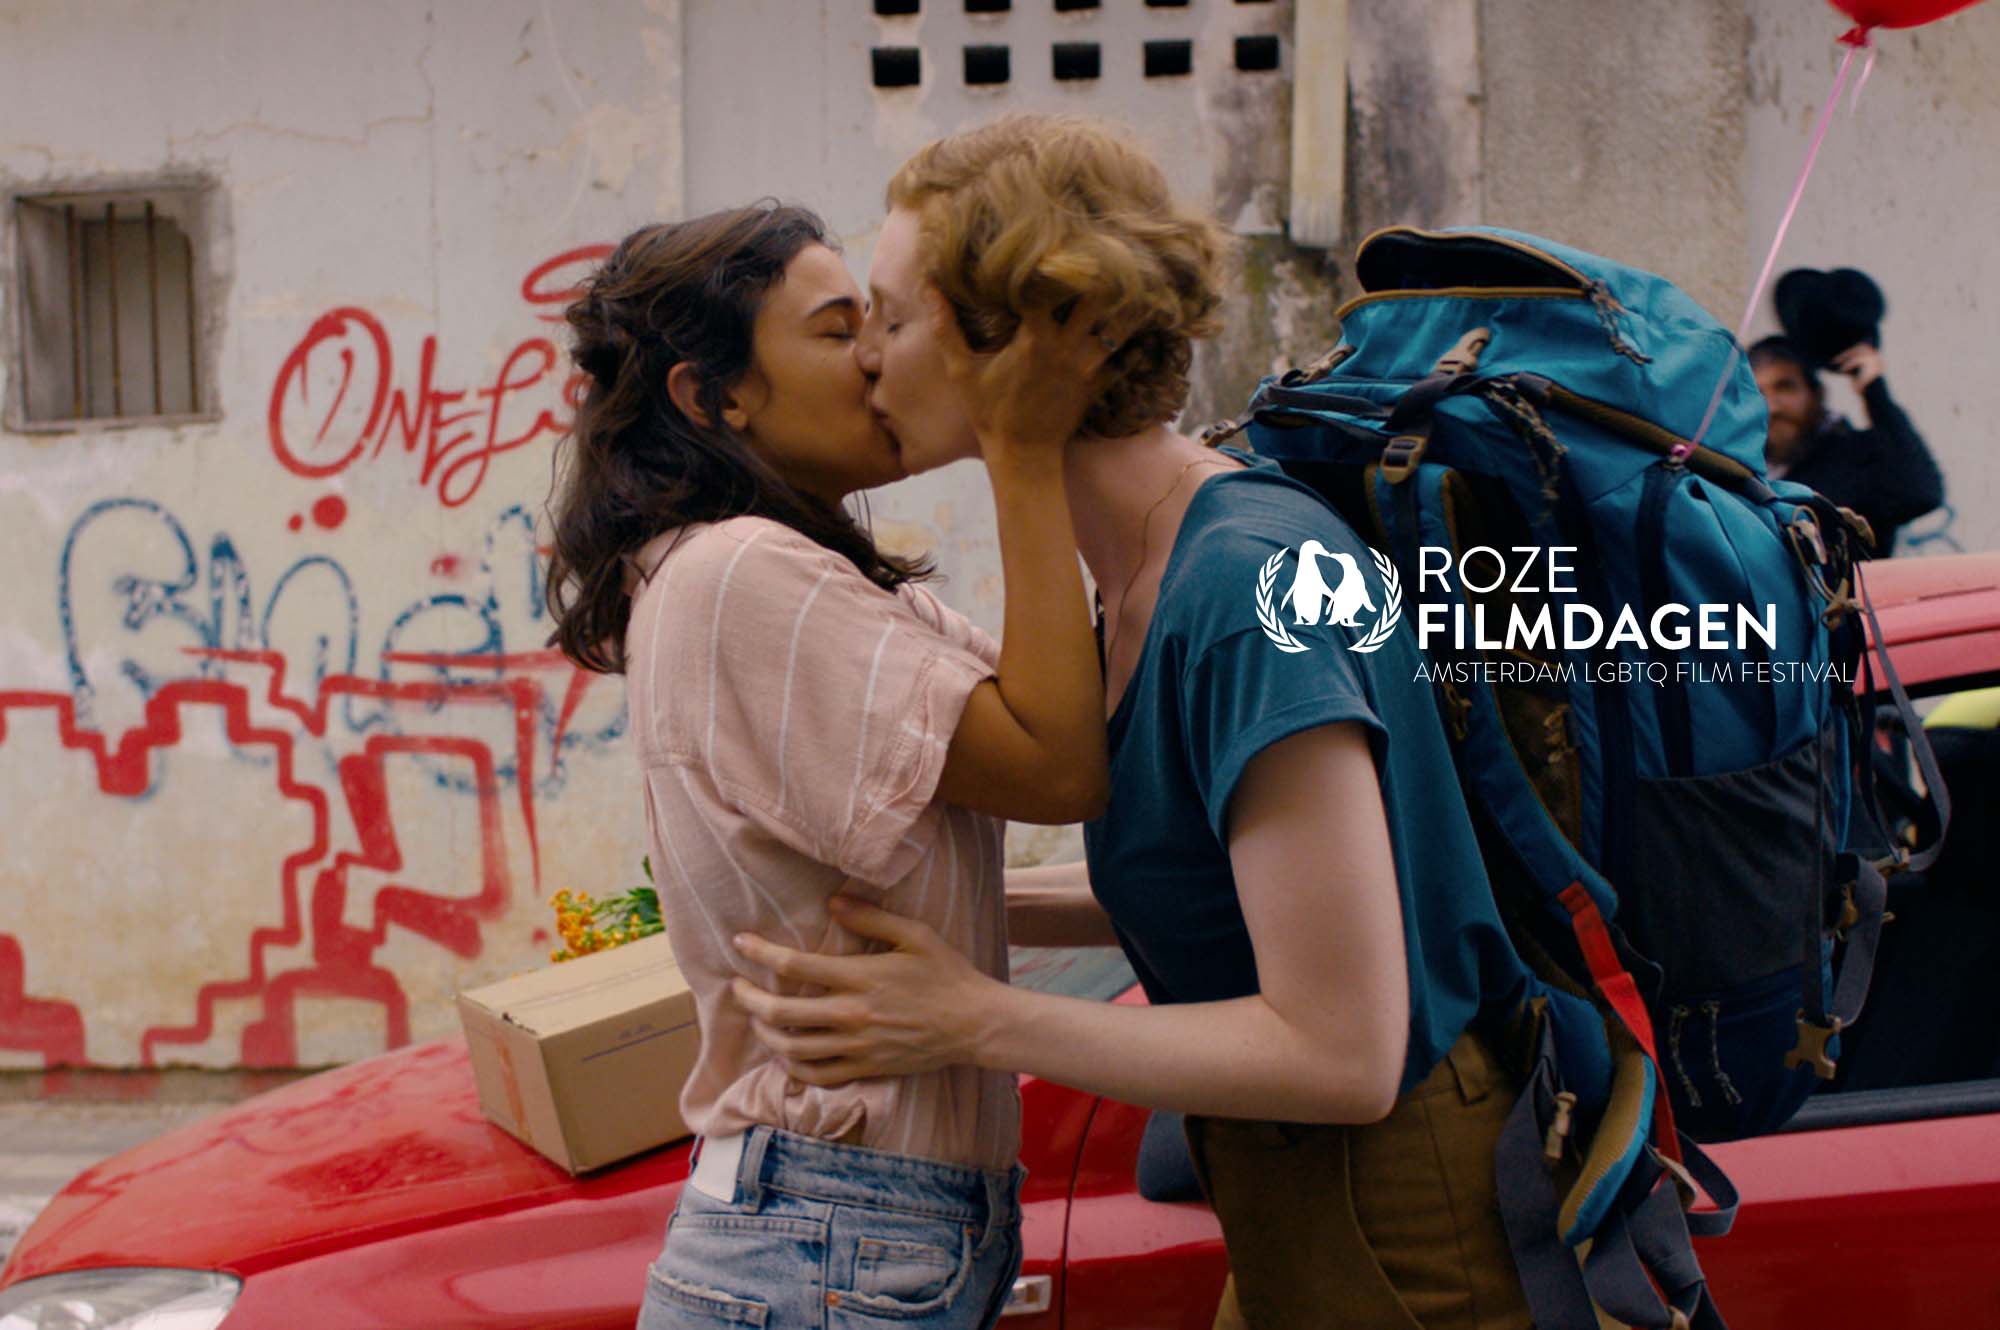 Lesbian movies 2021 at Amsterdam LGBTQ Filmfestival Roze Filmdagen 1 - ArenaHype